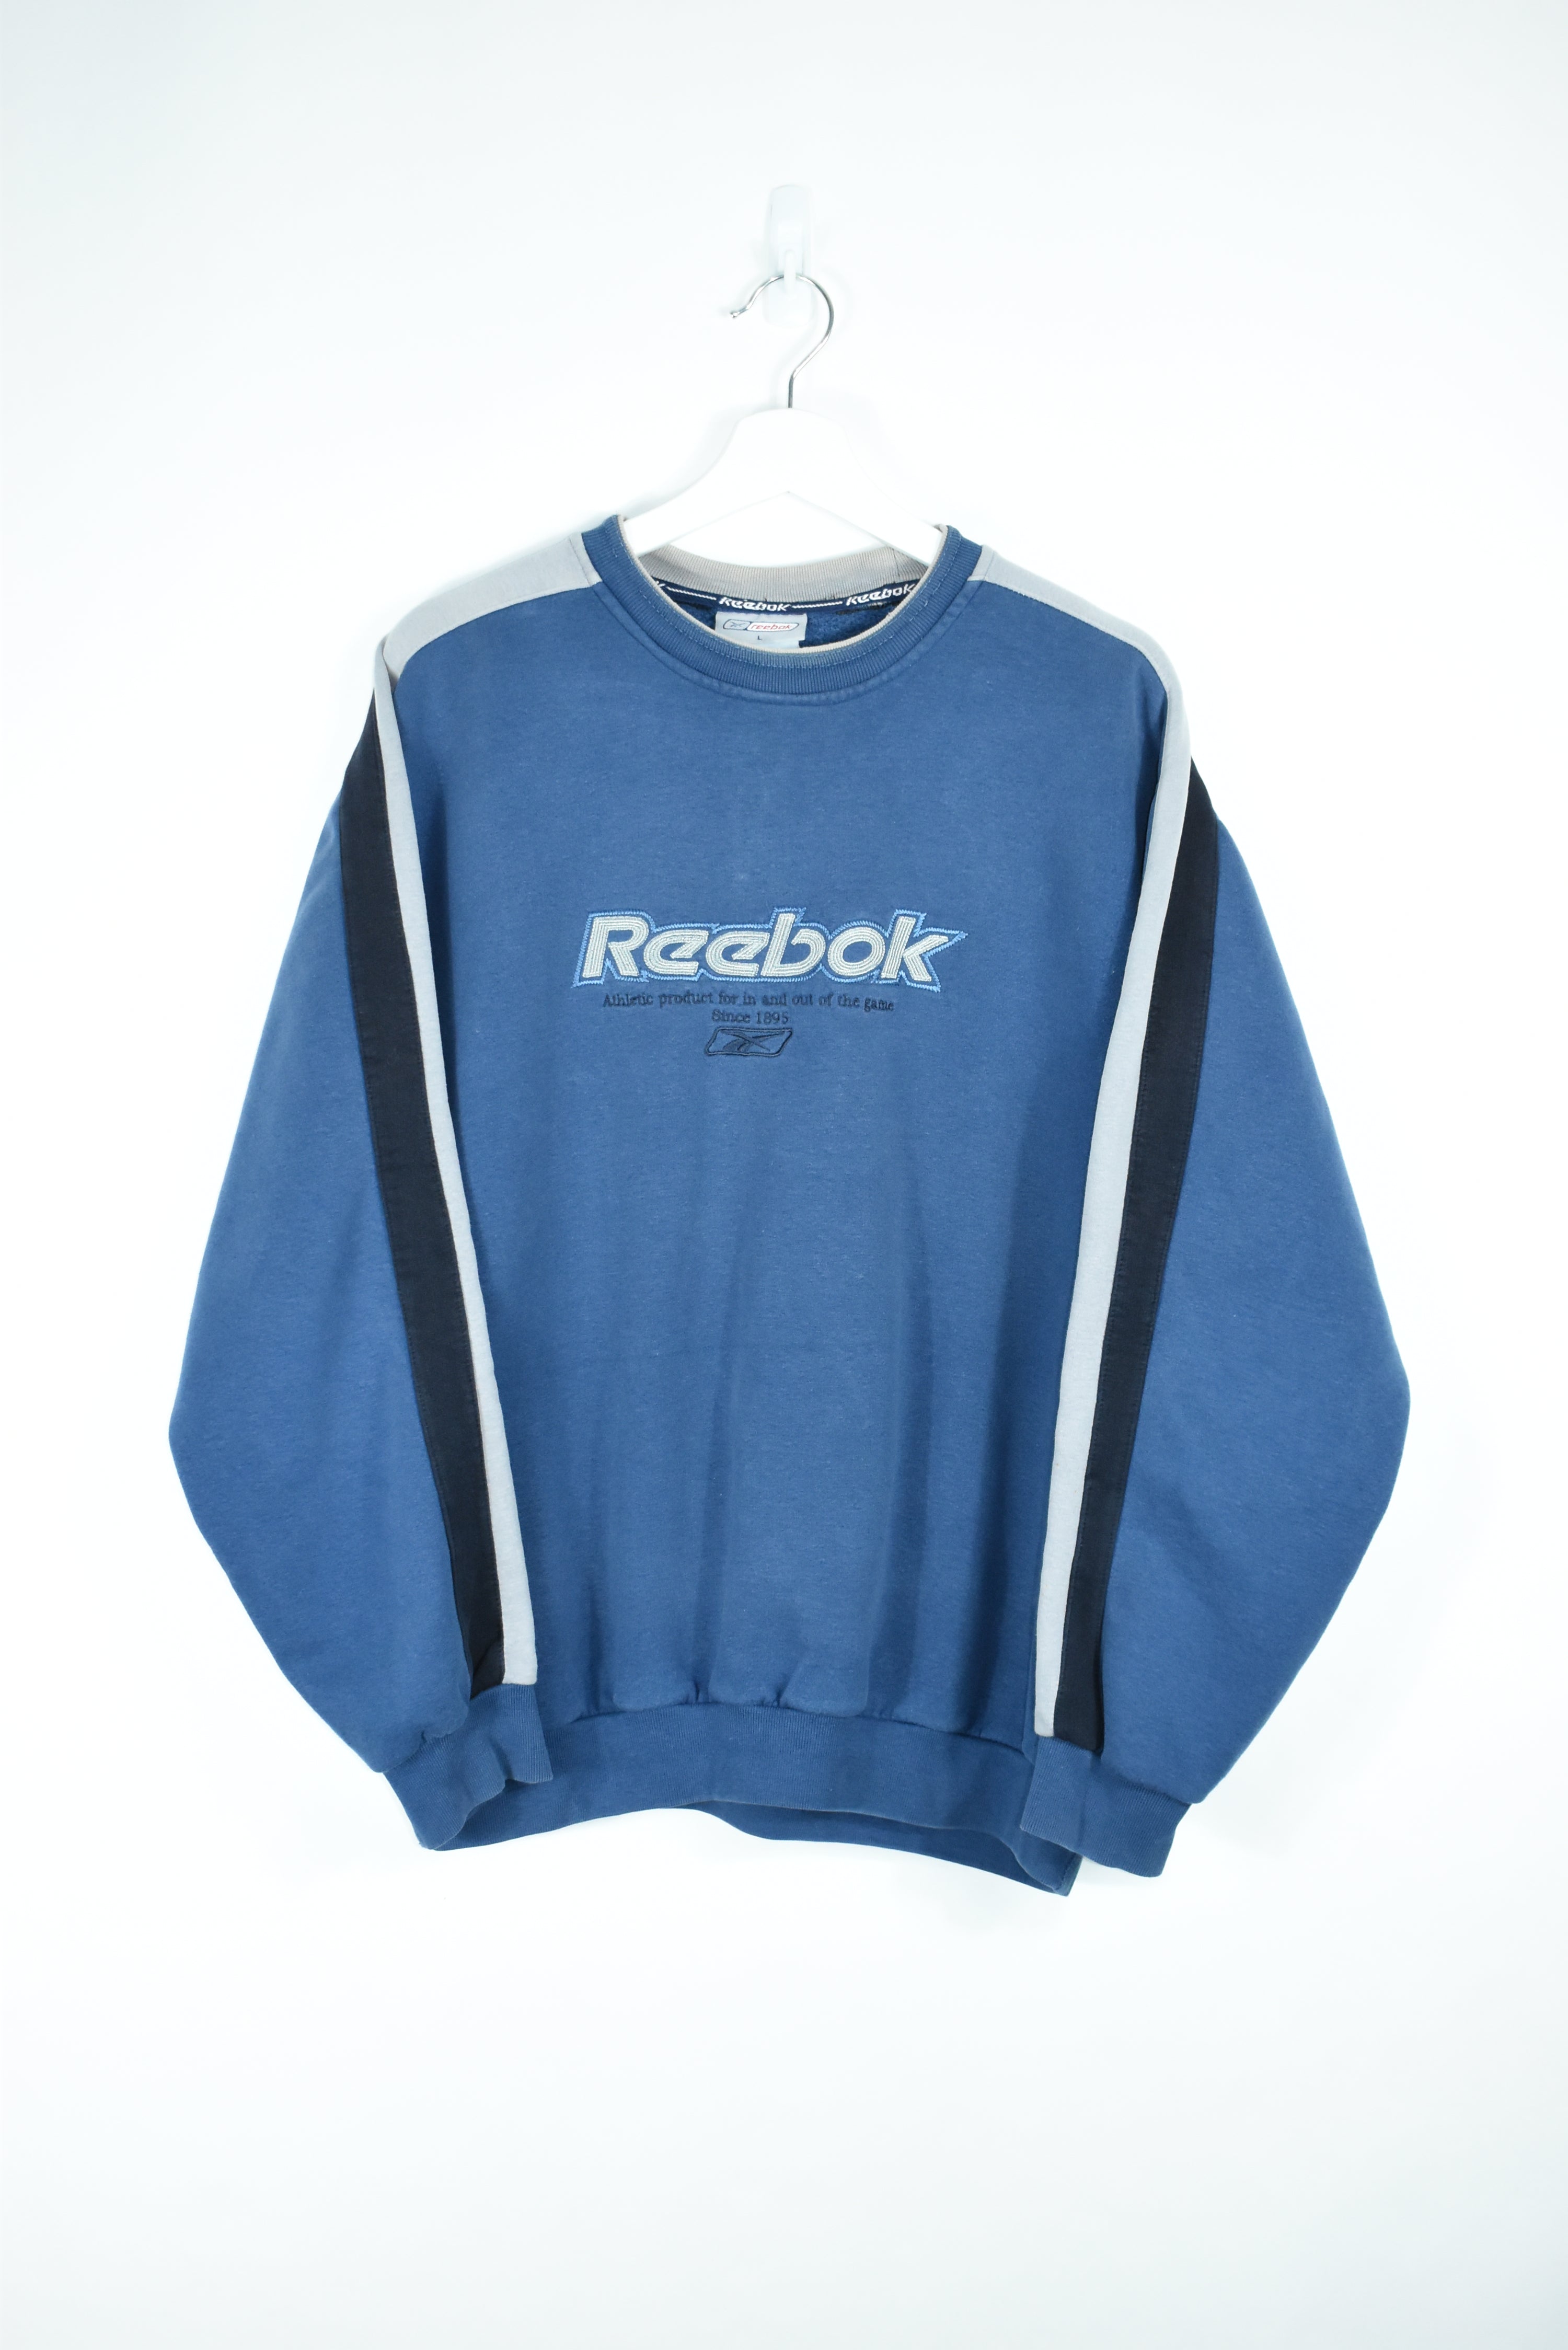 Vintage Reebok Embroidery Sweatshirt LARGE (Baggy)